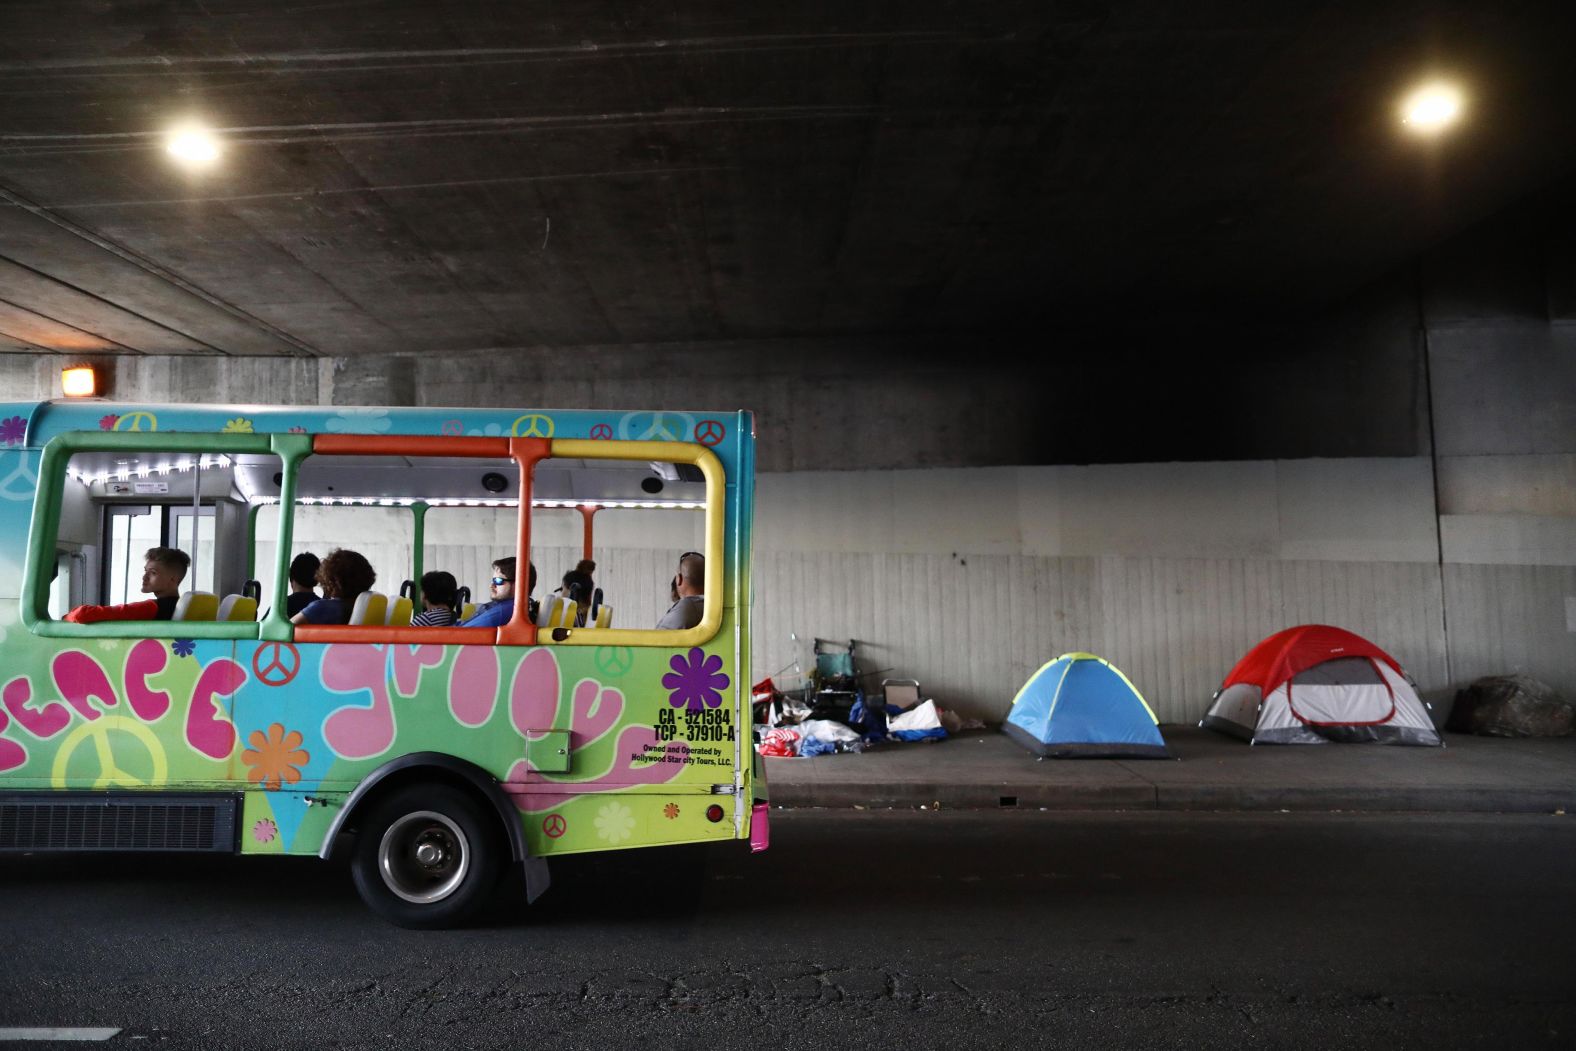 A tour bus passes a homeless encampment located beneath an overpass on June 5.